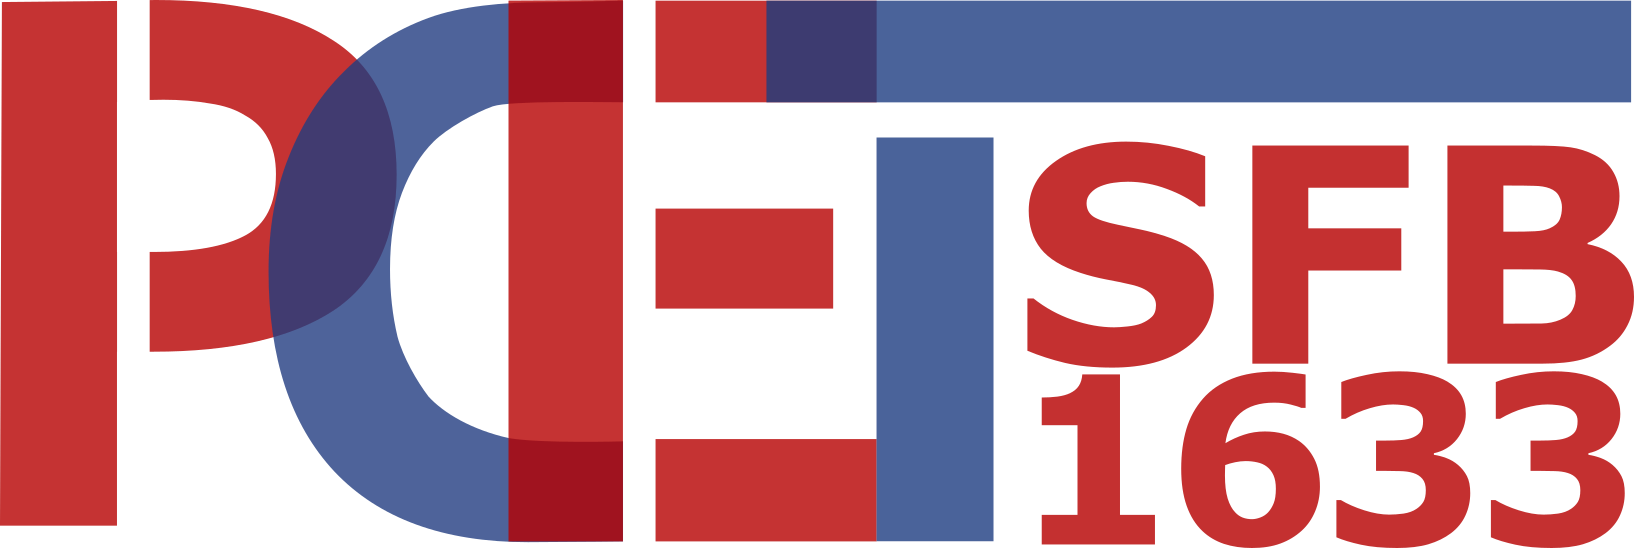 PCET Logo hr